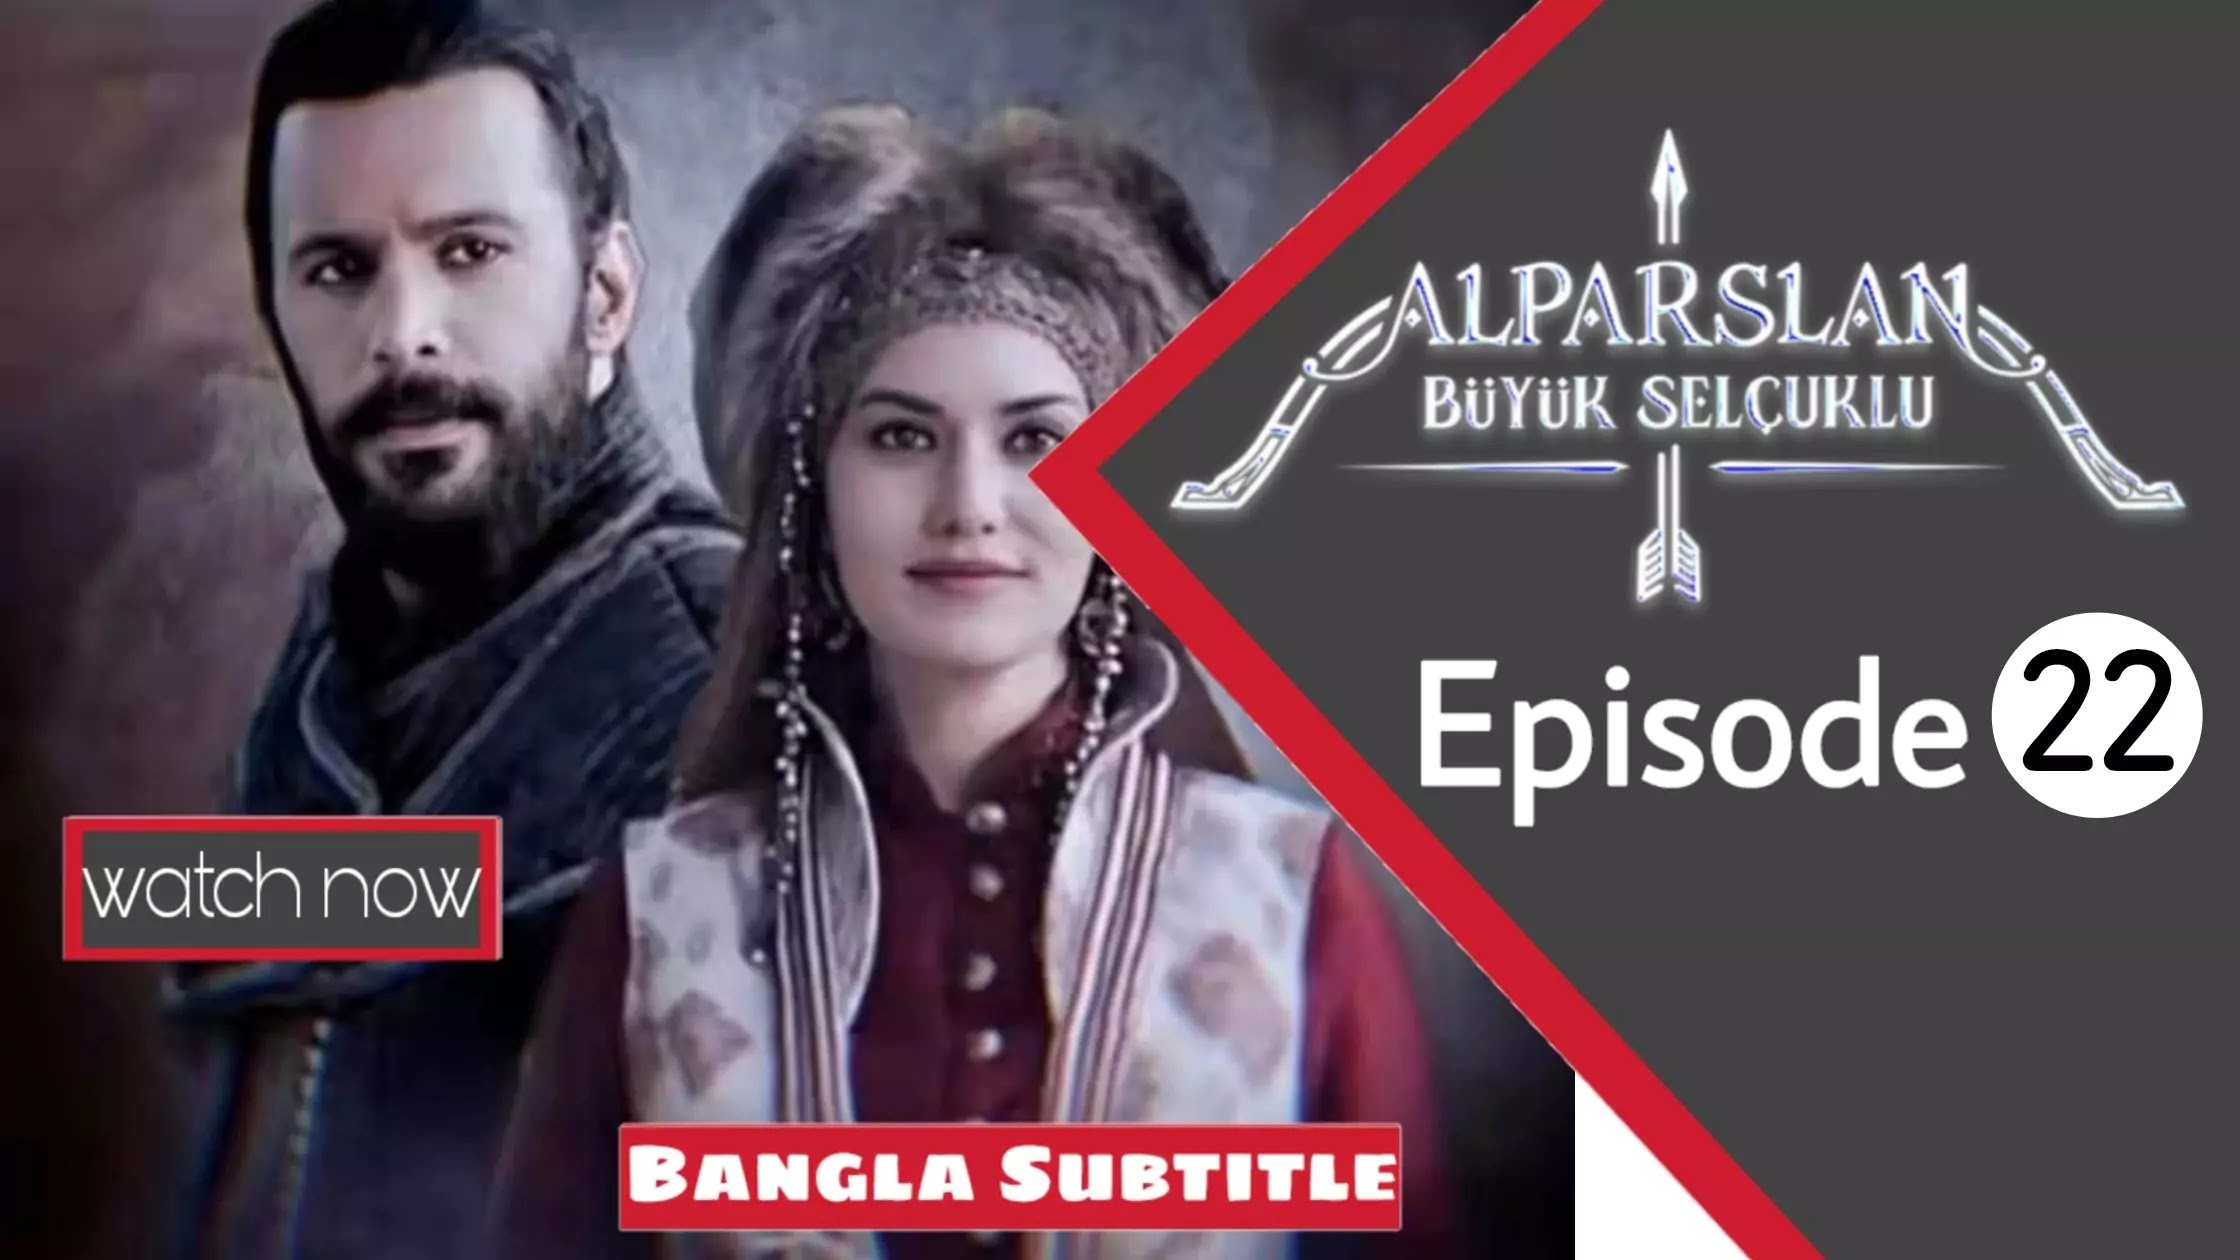 Alparslan Buyuk Selcuklu Episode 22 Bangla Subtitle